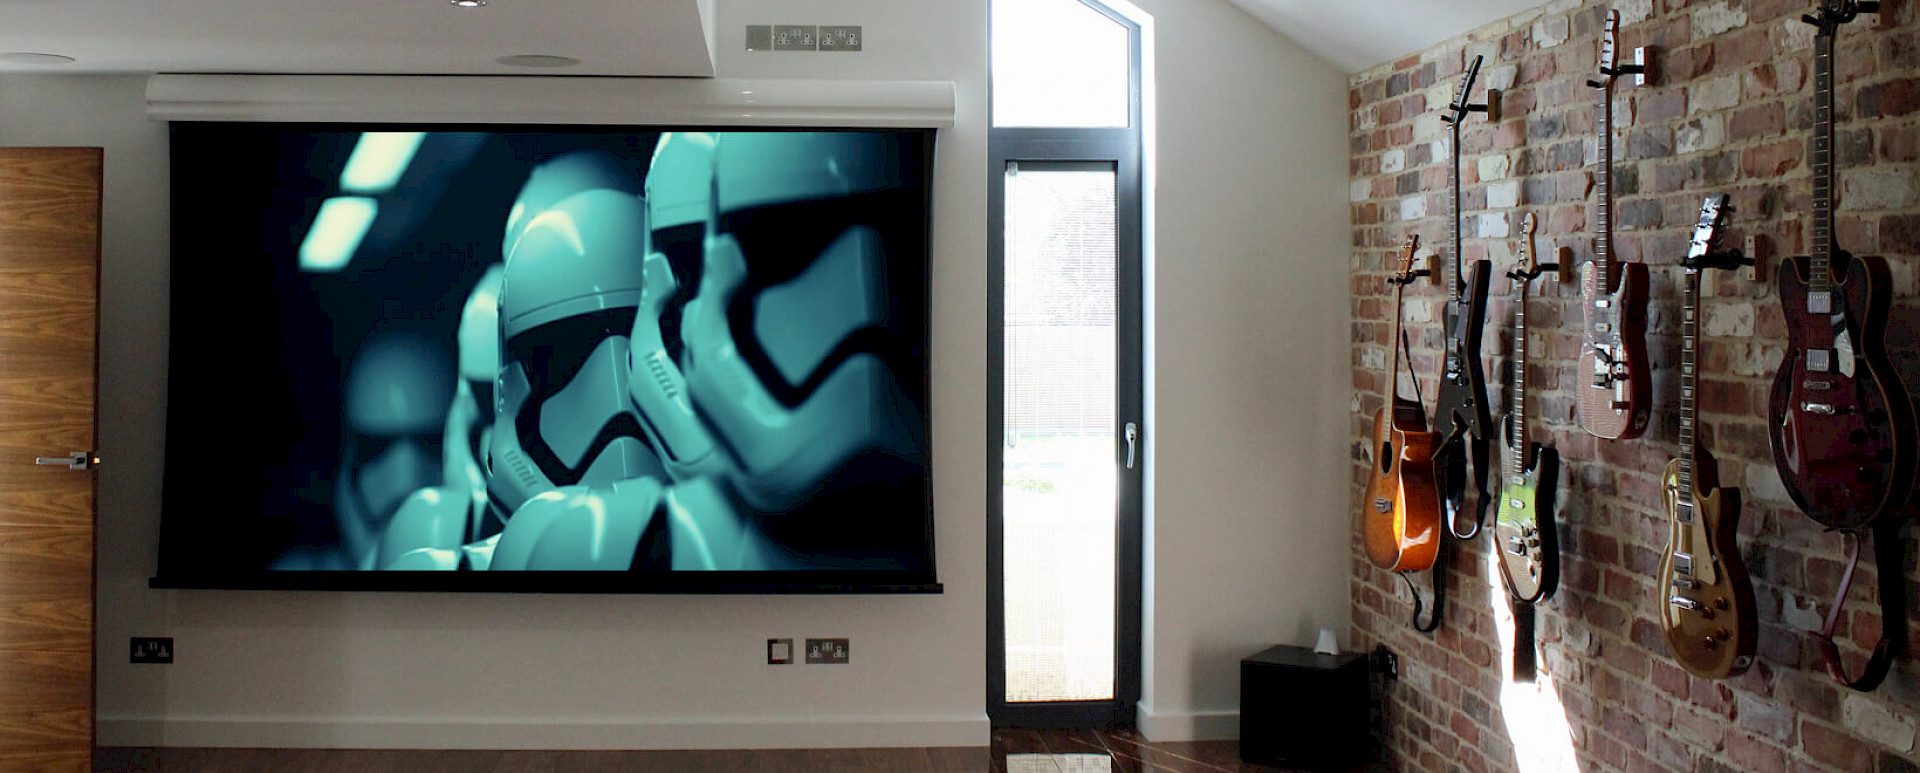 home cinema projector screen